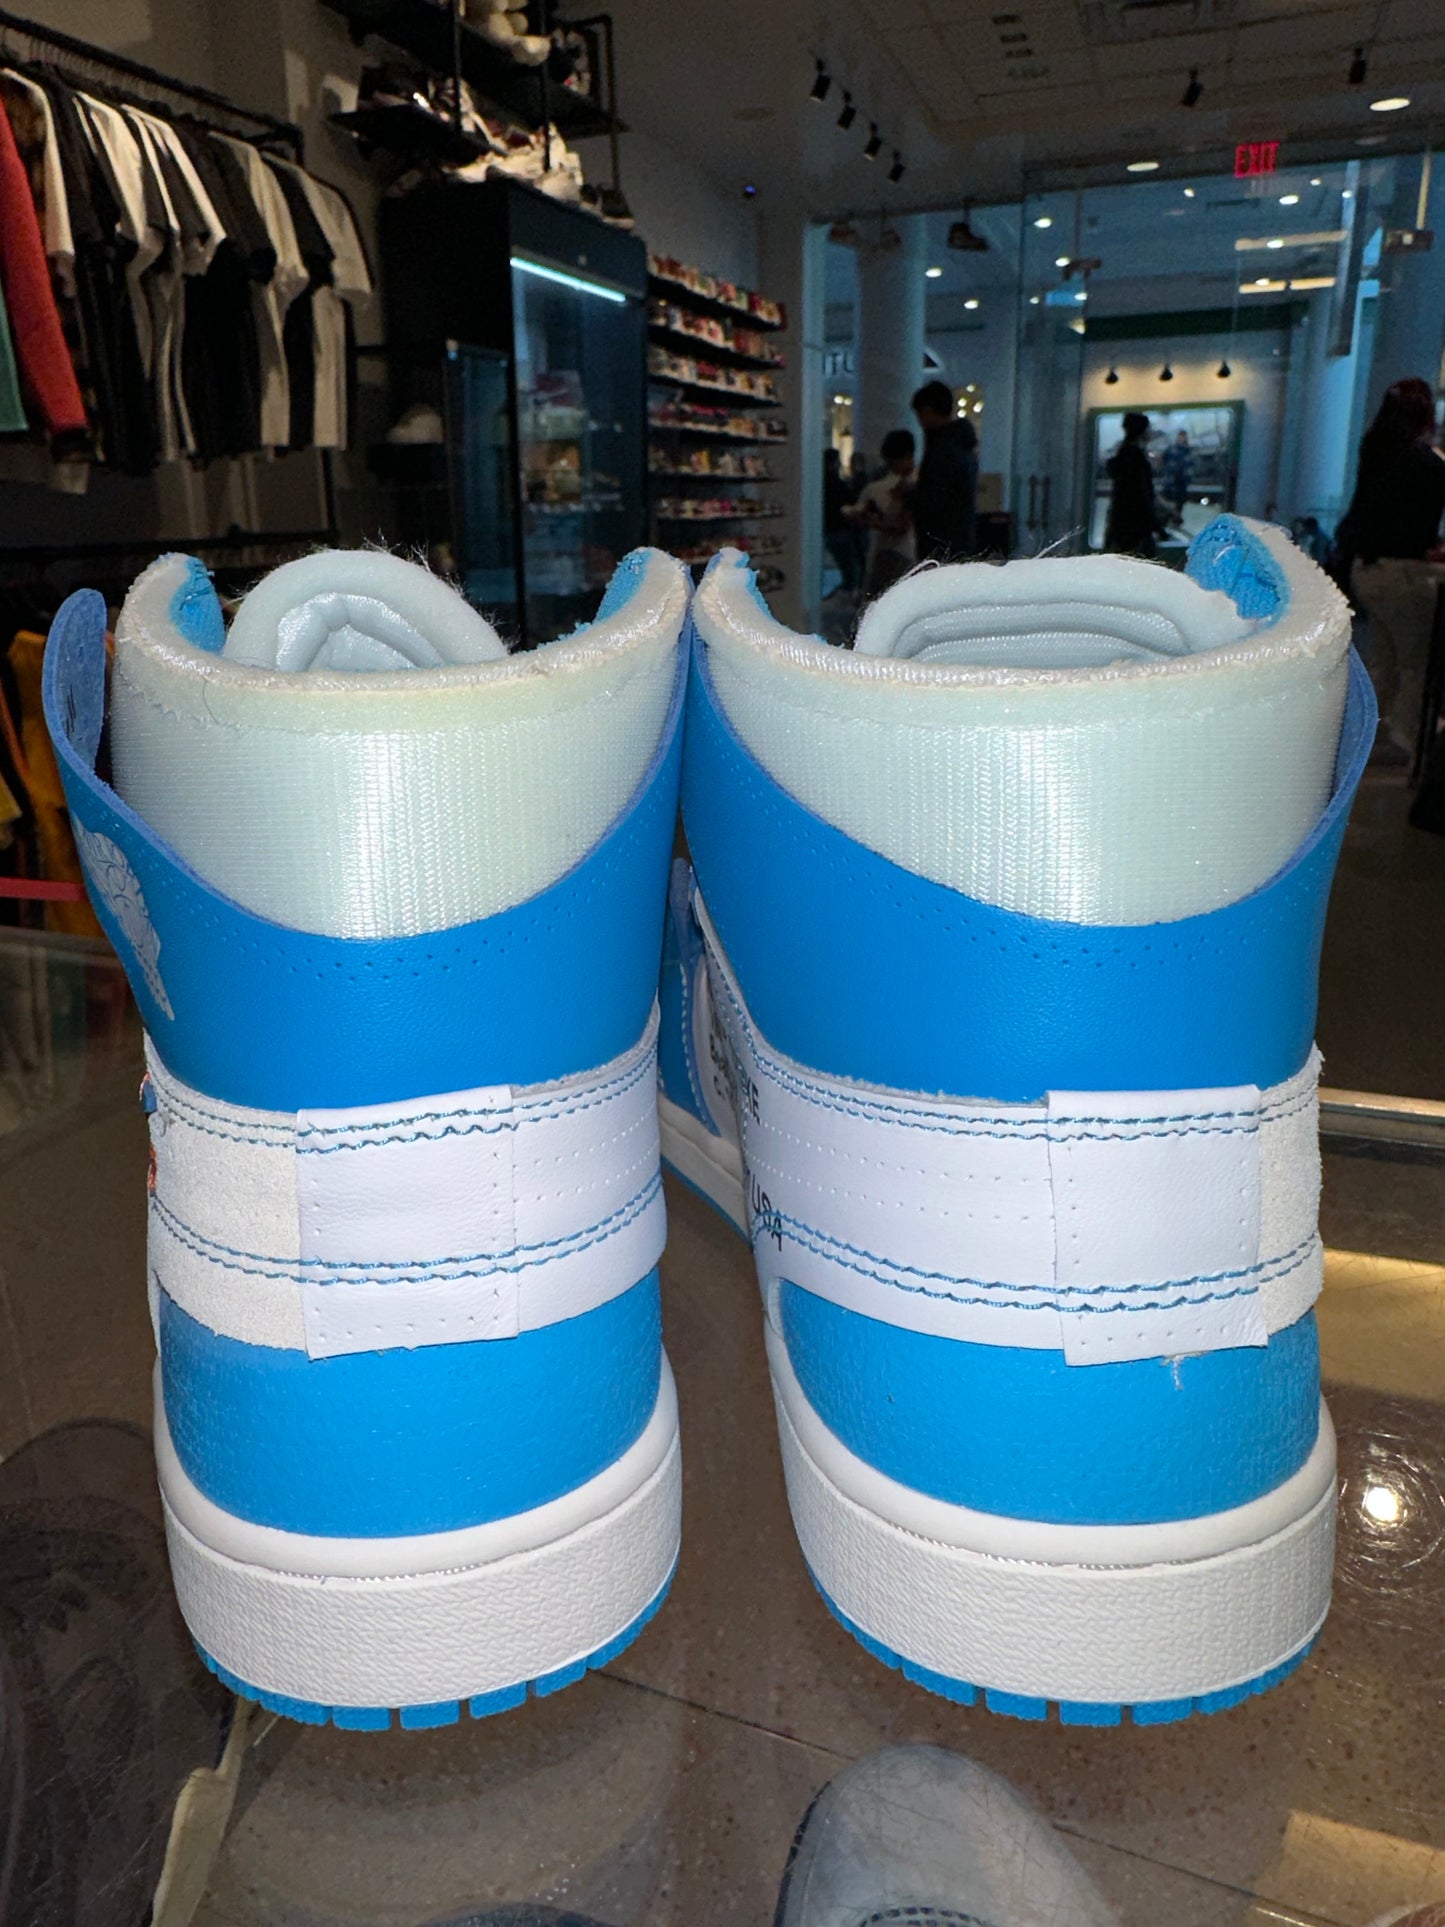 Size 6.5 Air Jordan 1 Off-White “University Blue” Brand New (Mall)